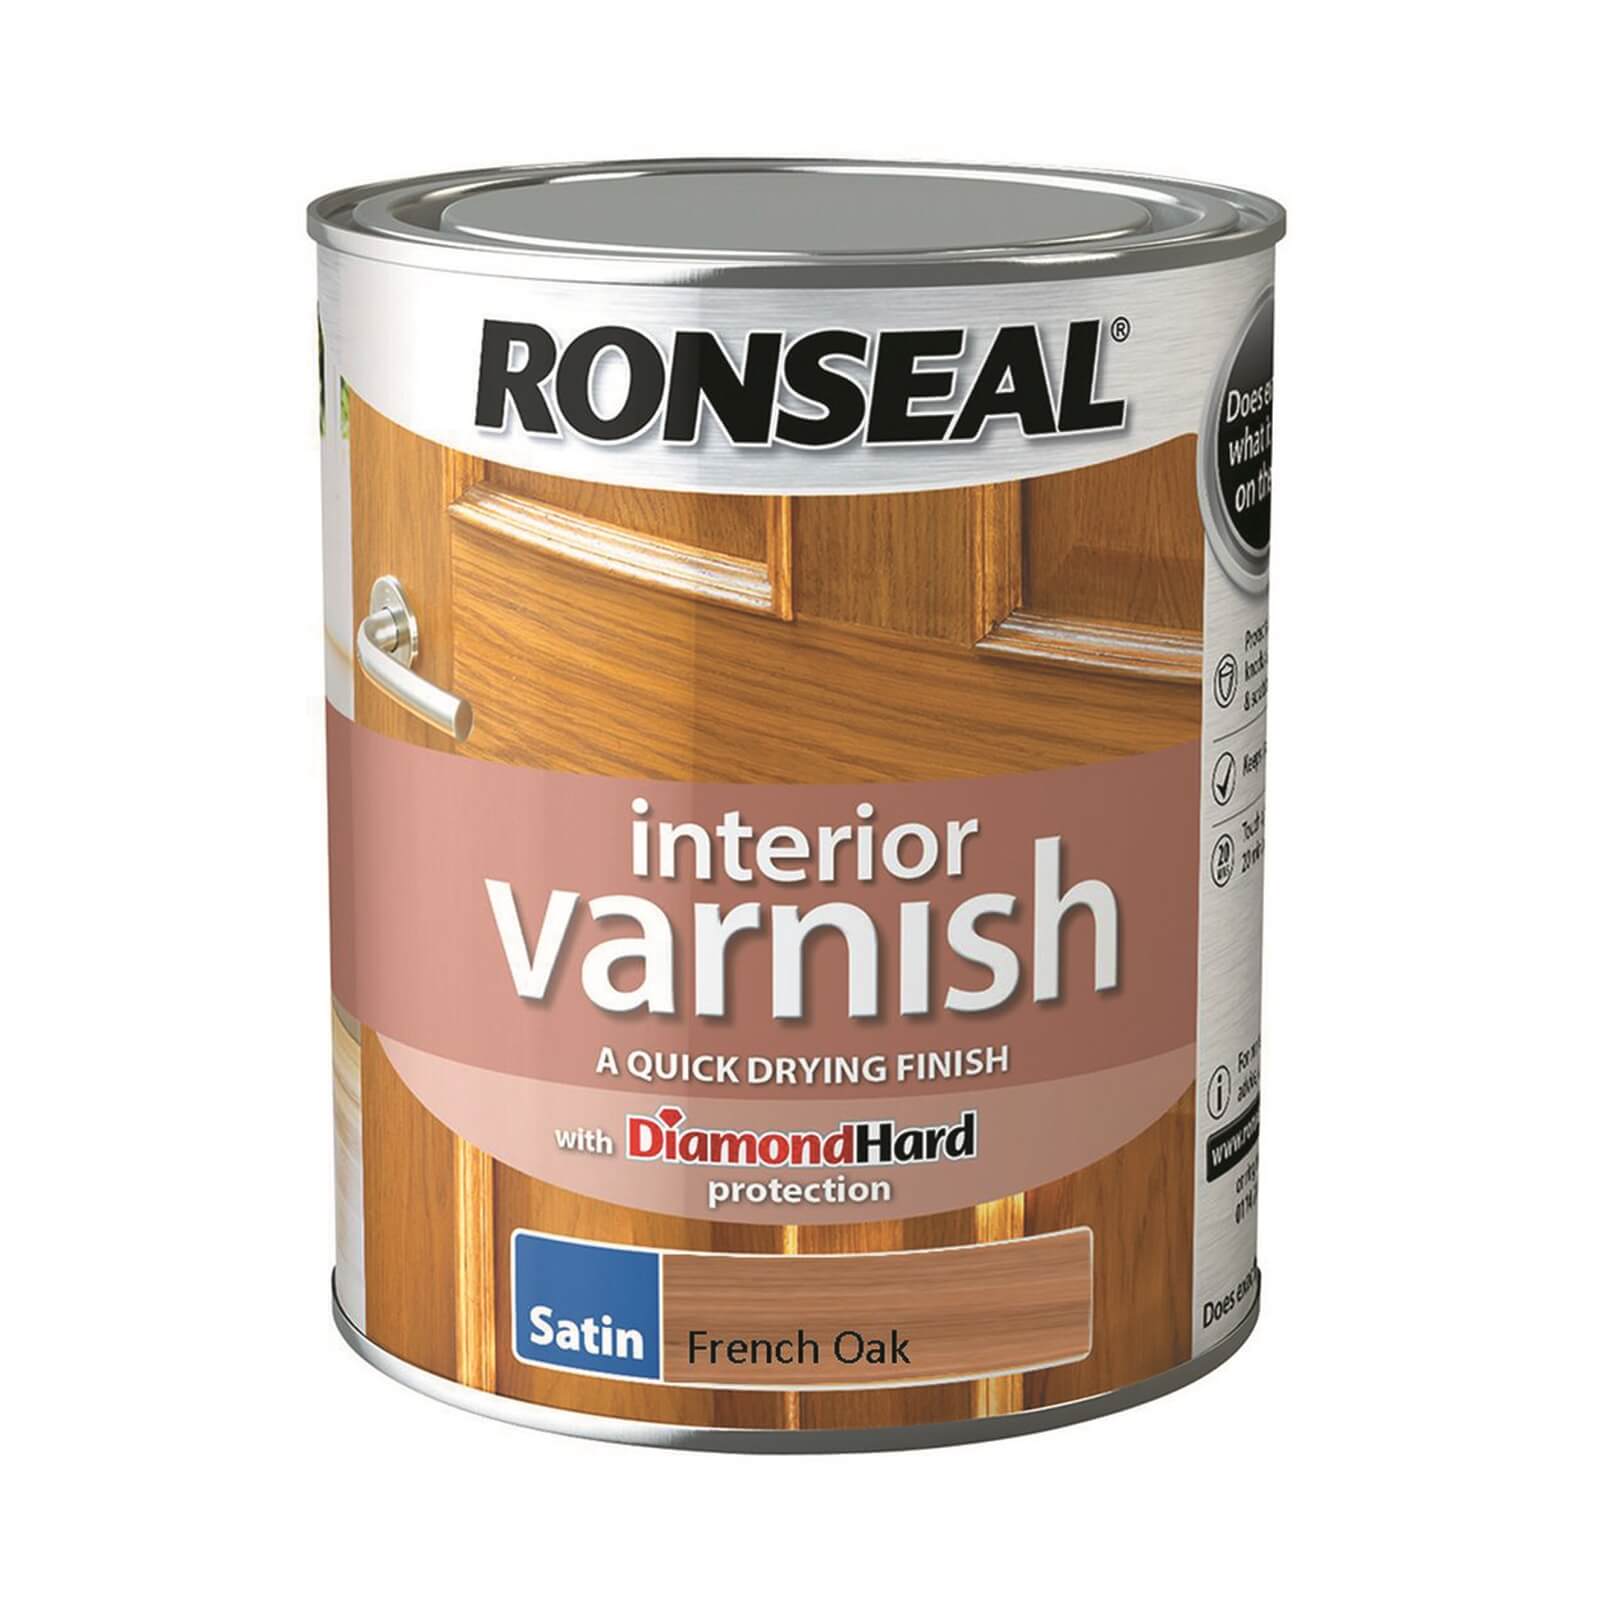 Ronseal Interior Varnish Satin French Oak - 750ml